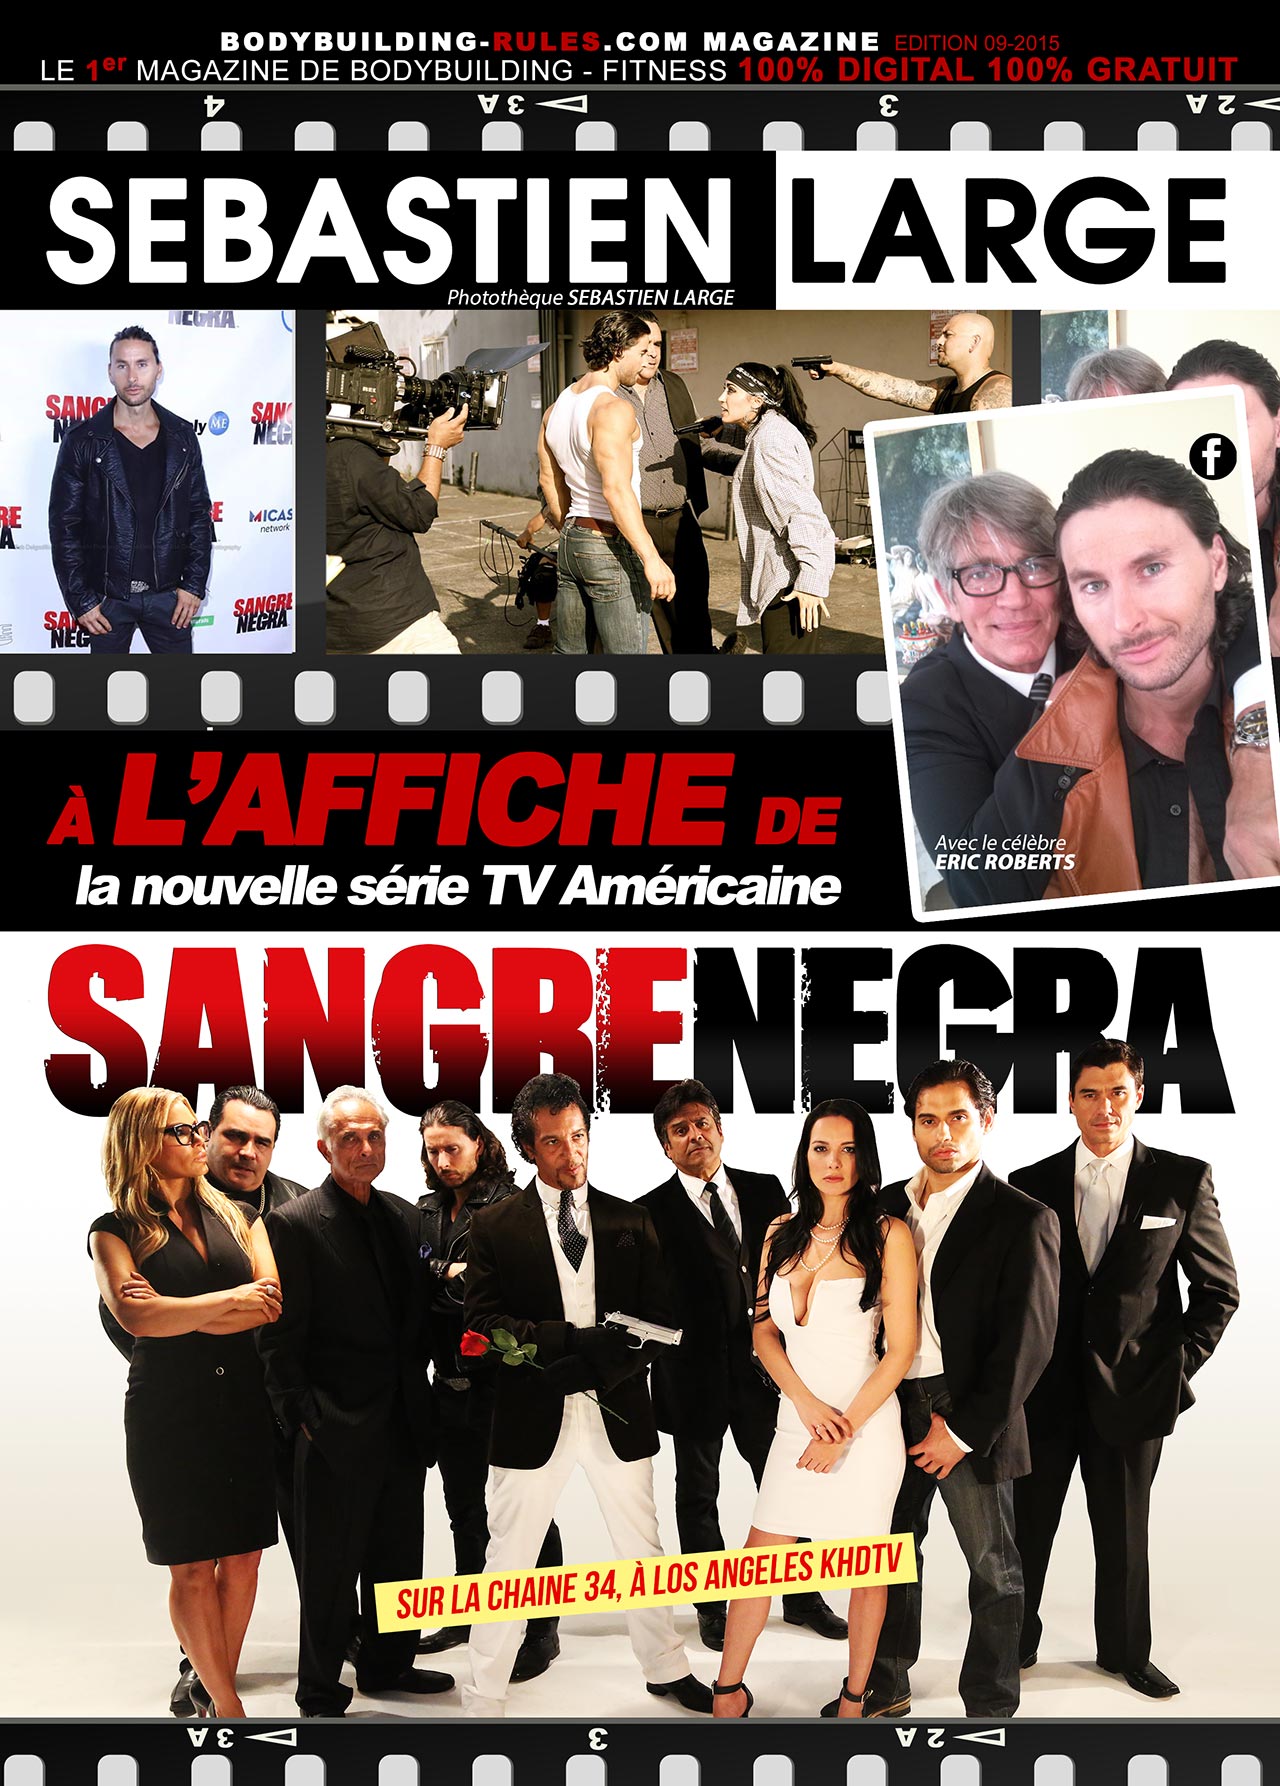 French Press for the new tv series SANGRE NEGRA September 2015.